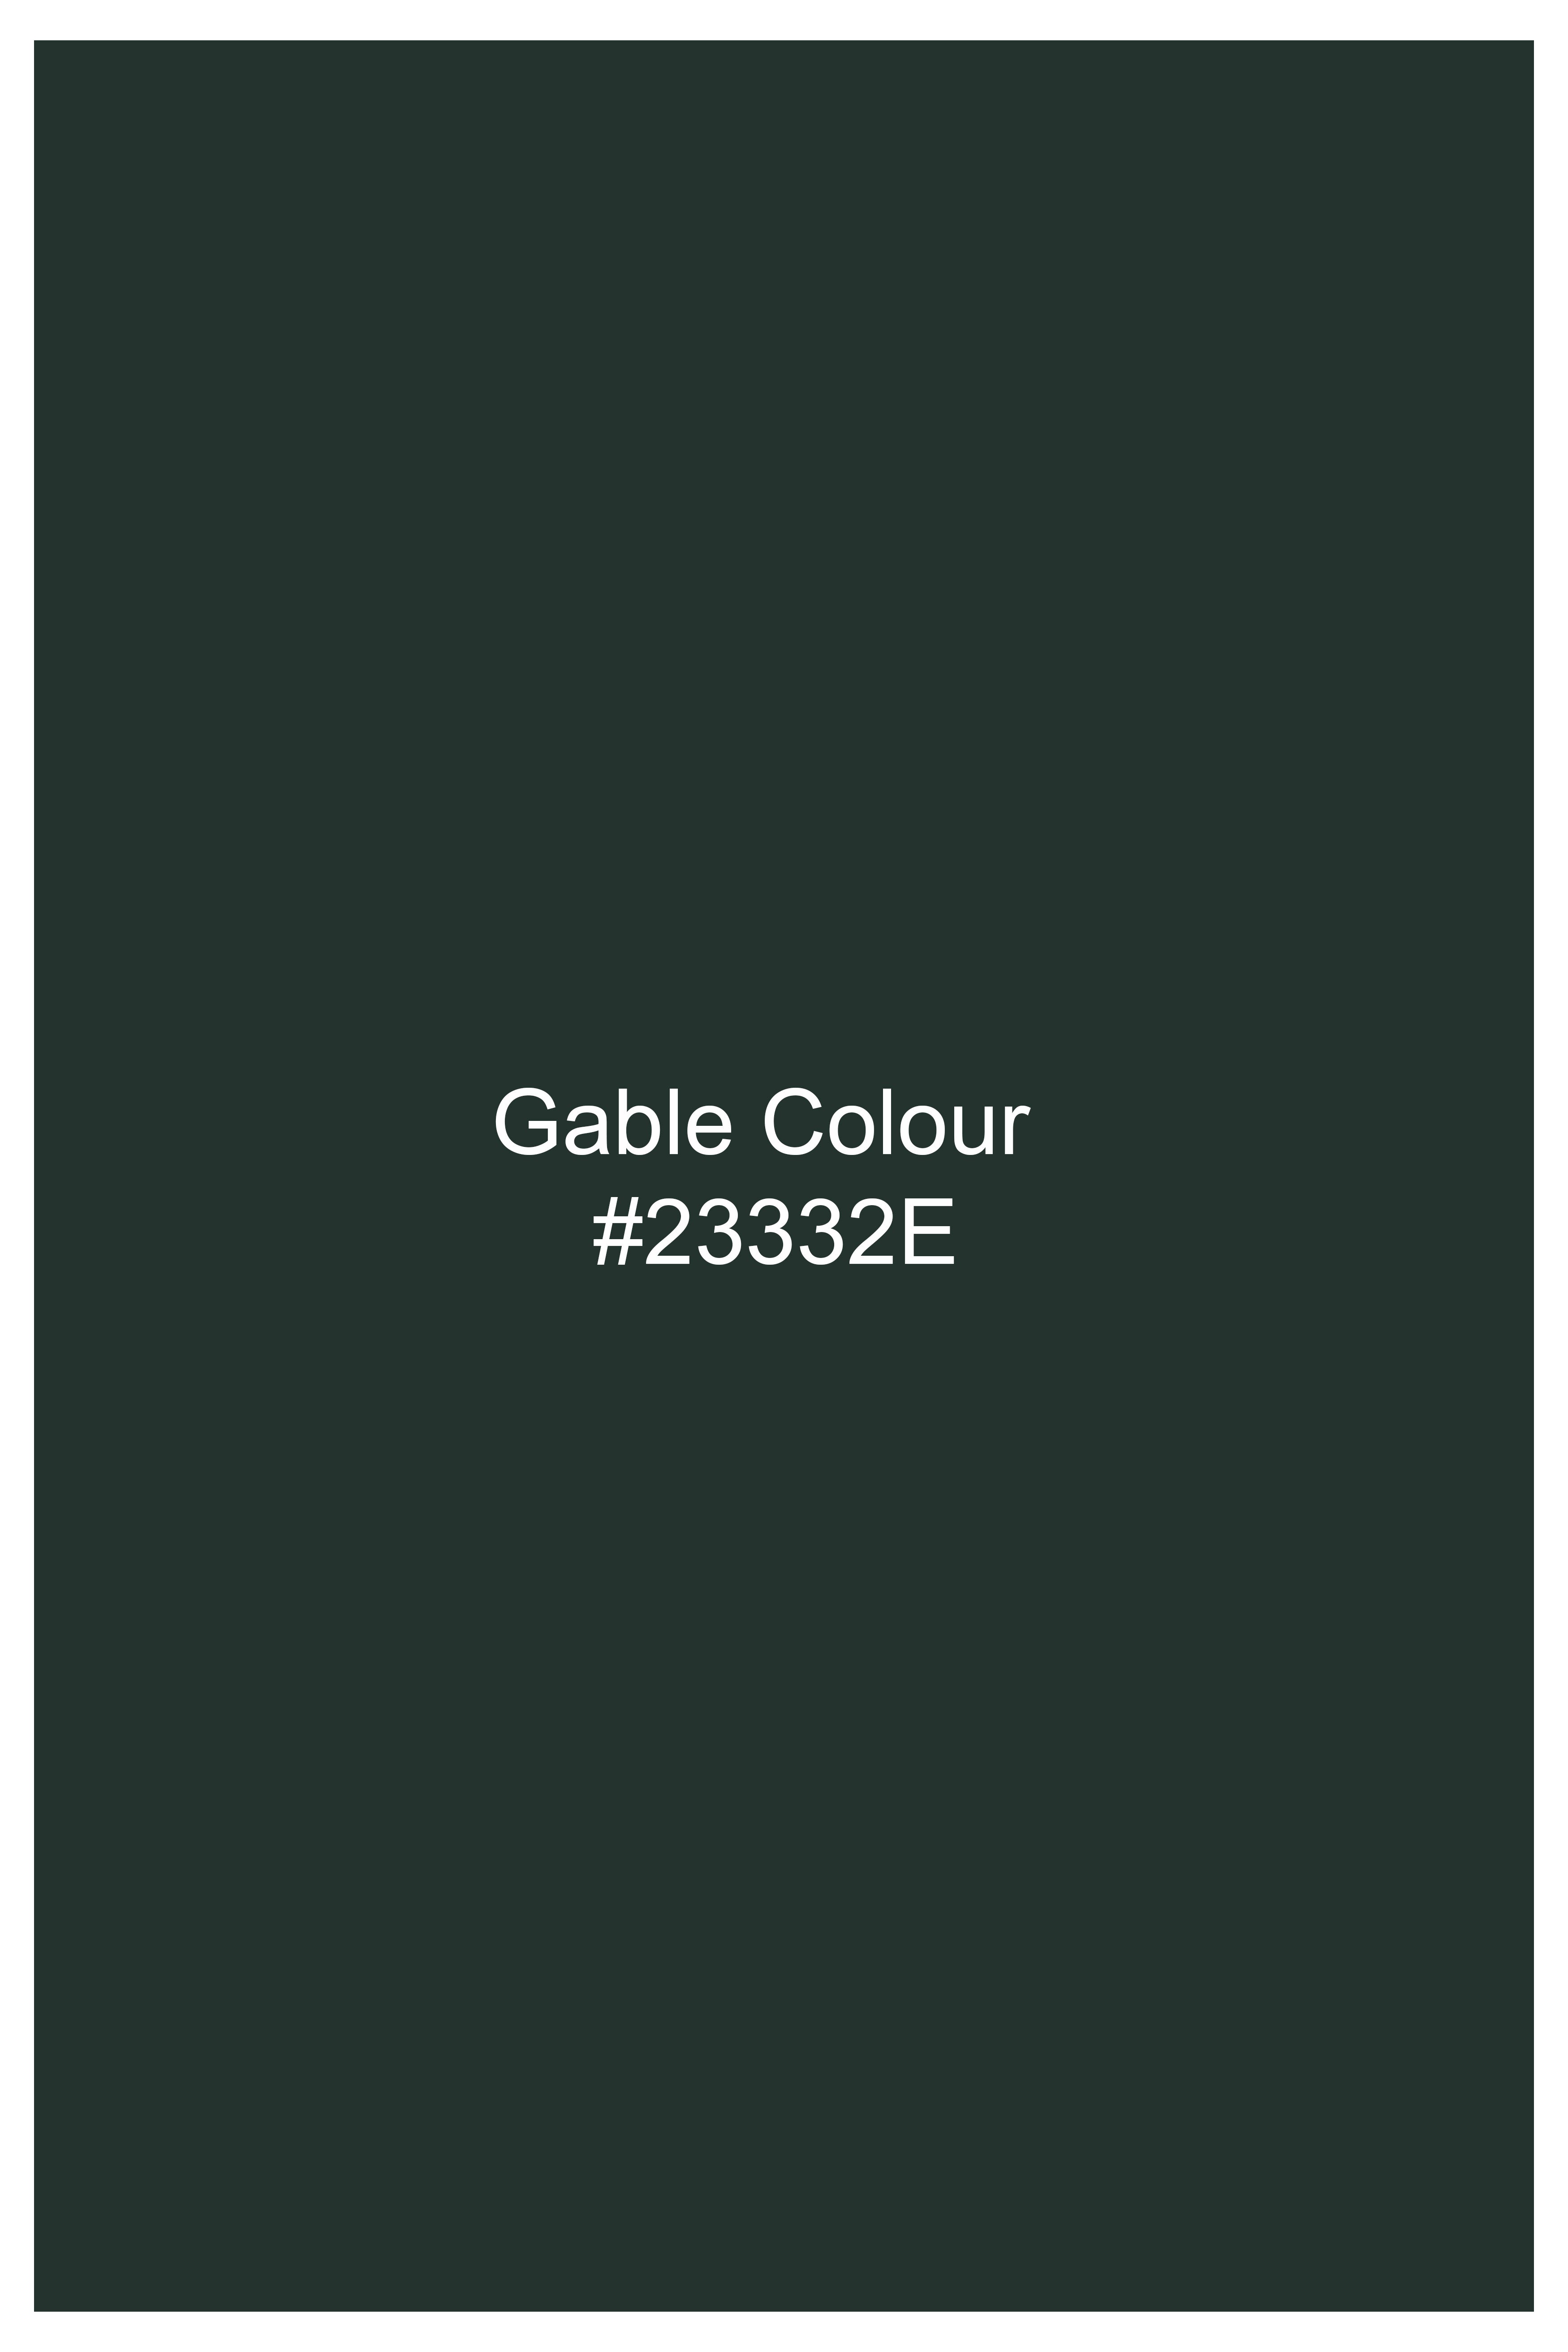 Gable Green Wool Rich Waistcoat V2728-36, V2728-38, V2728-40, V2728-42, V2728-44, V2728-46, V2728-48, V2728-50, V2728-52, V2728-54, V2728-56, V2728-58, V2728-60